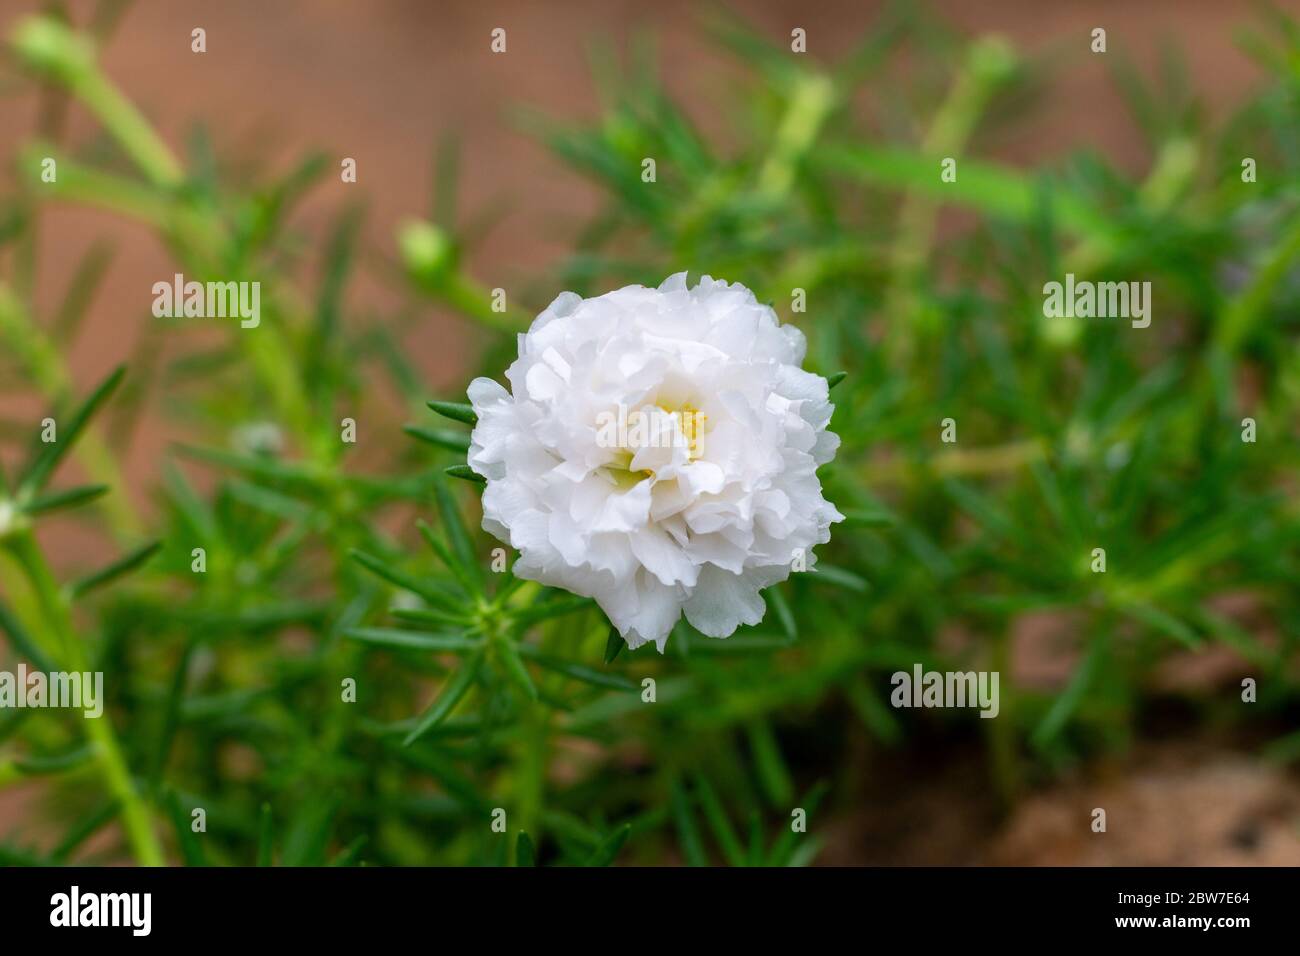 White flower in the garden called Common Purslane, Verdolaga, Pigweed, Little Hogweed, Portulaca, sun plant or Pusley. Stock Photo